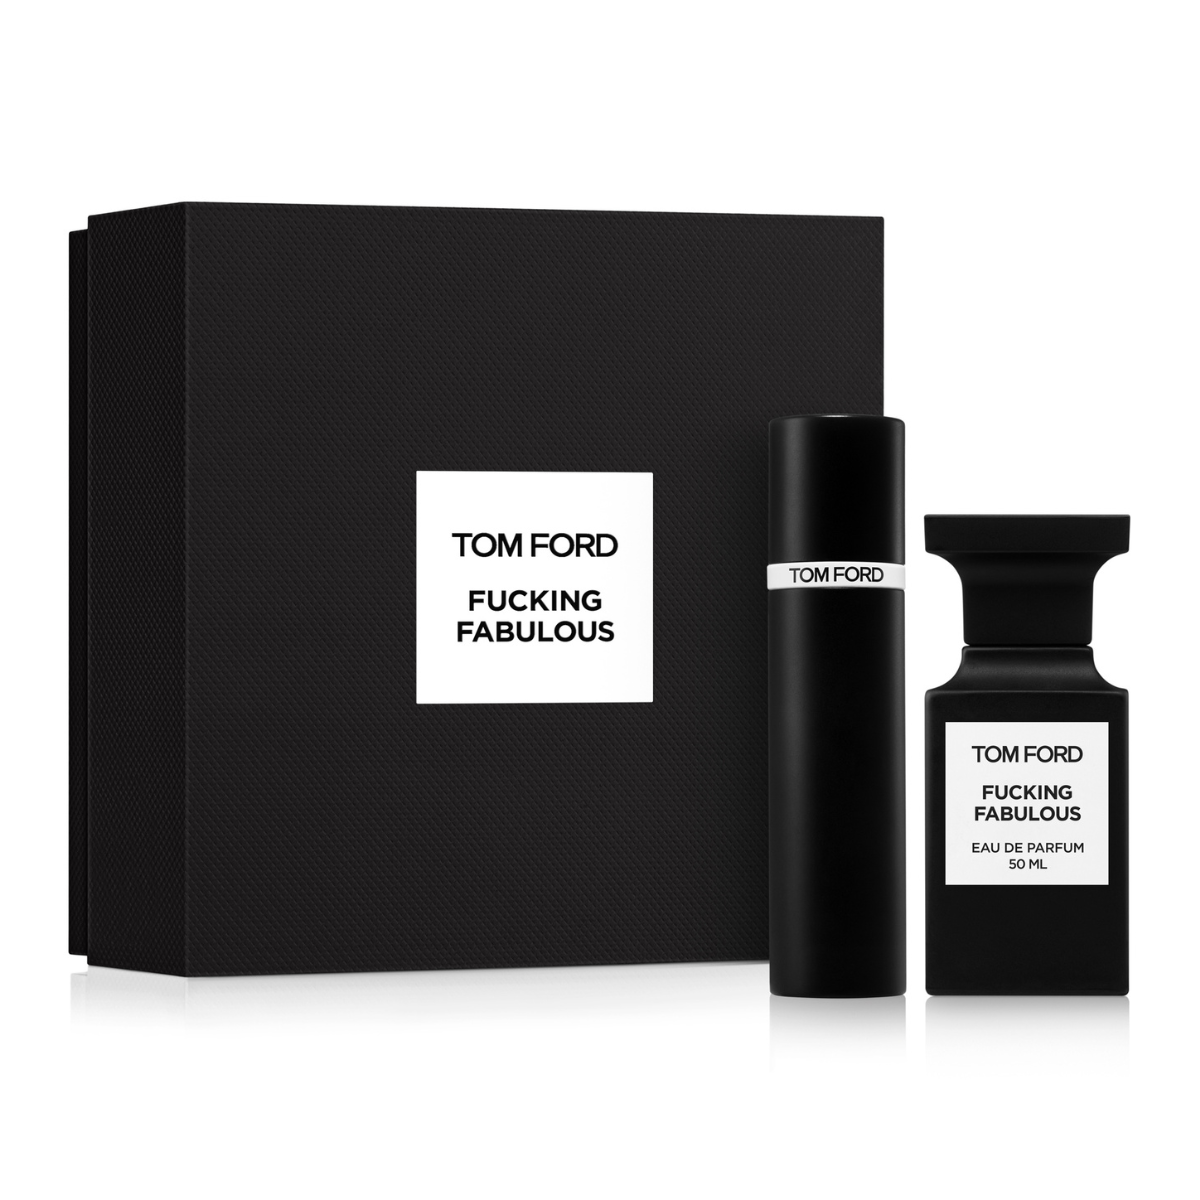 Tom Ford Set Fucking Fabulous Eau de Parfum